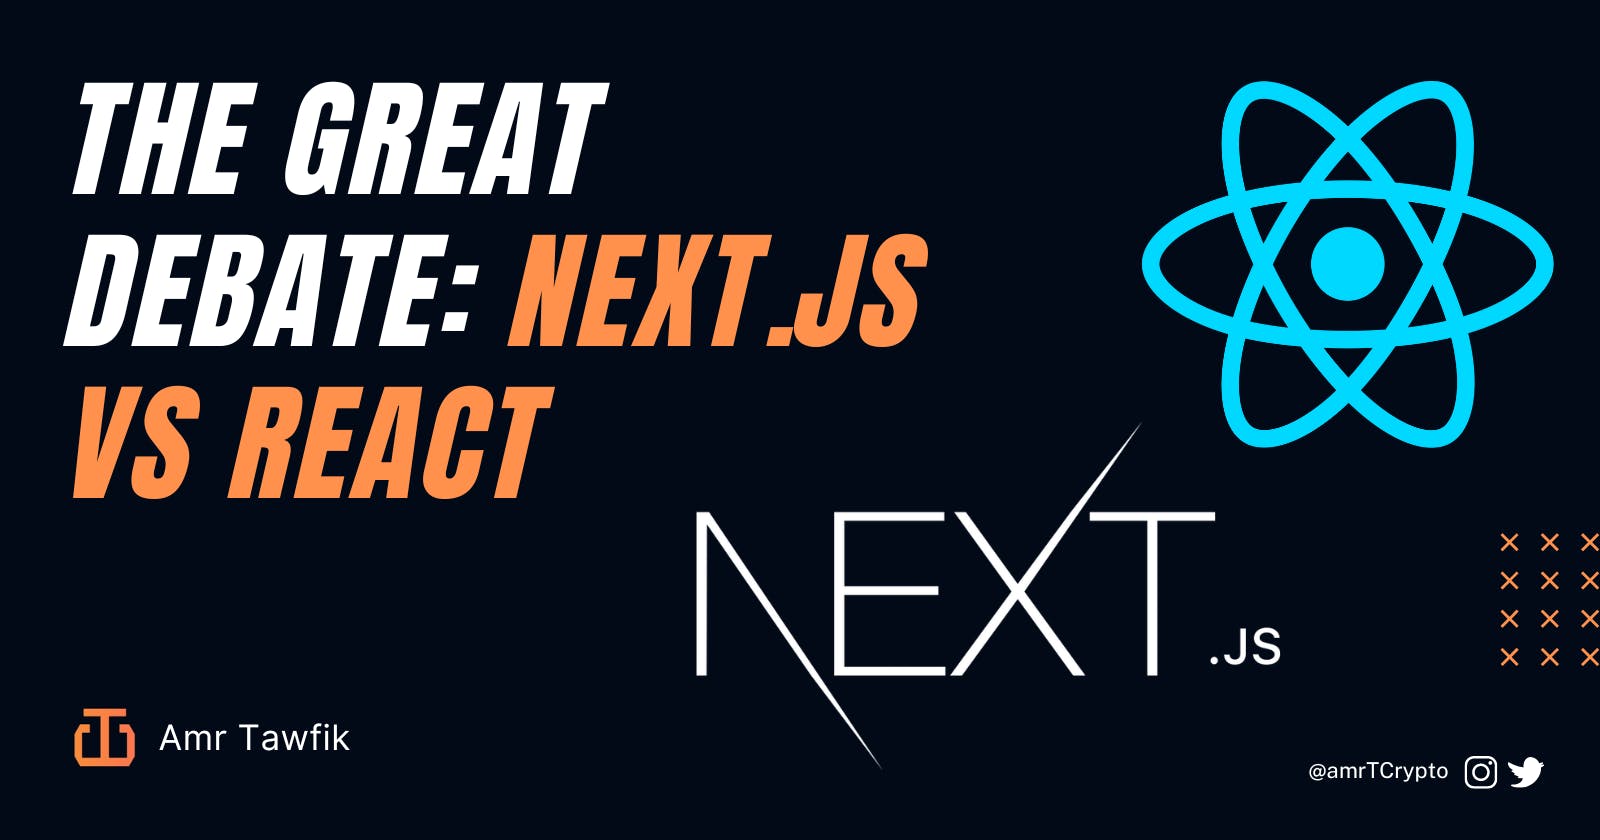 The Great Debate: Next.js vs React